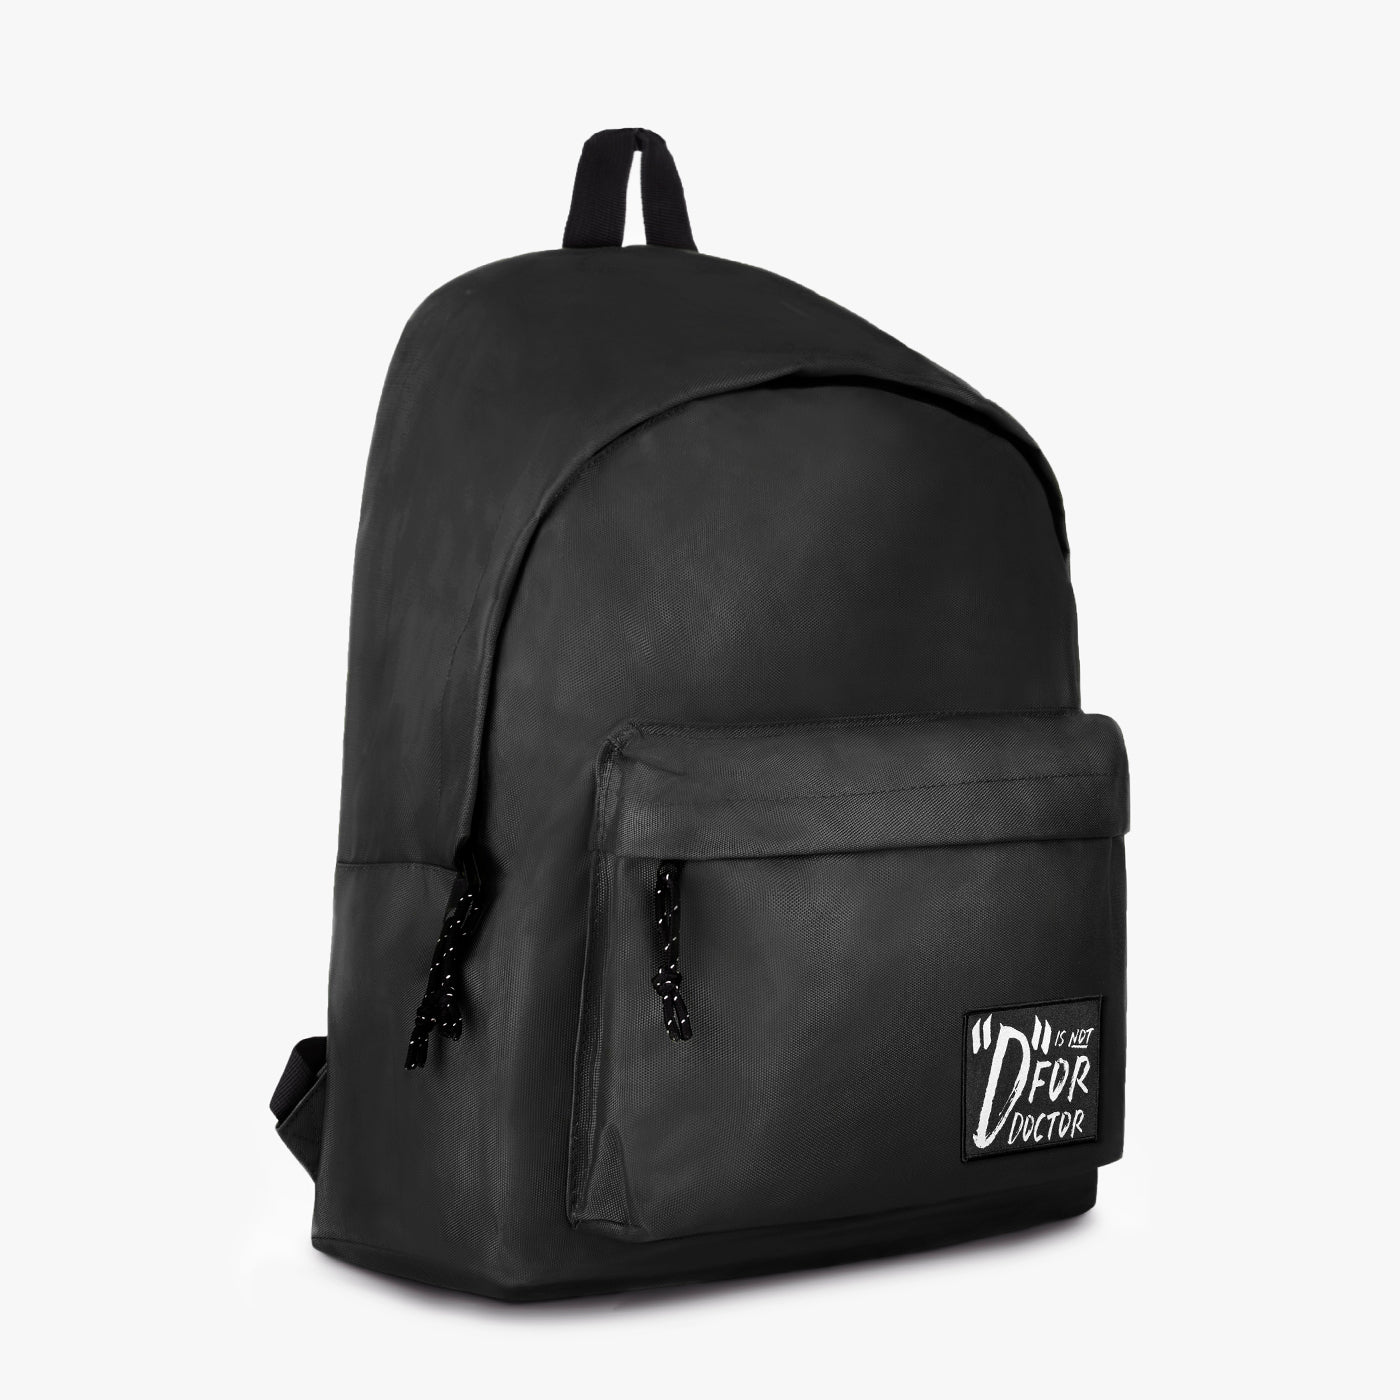 Basic Backpack "D" is not Black